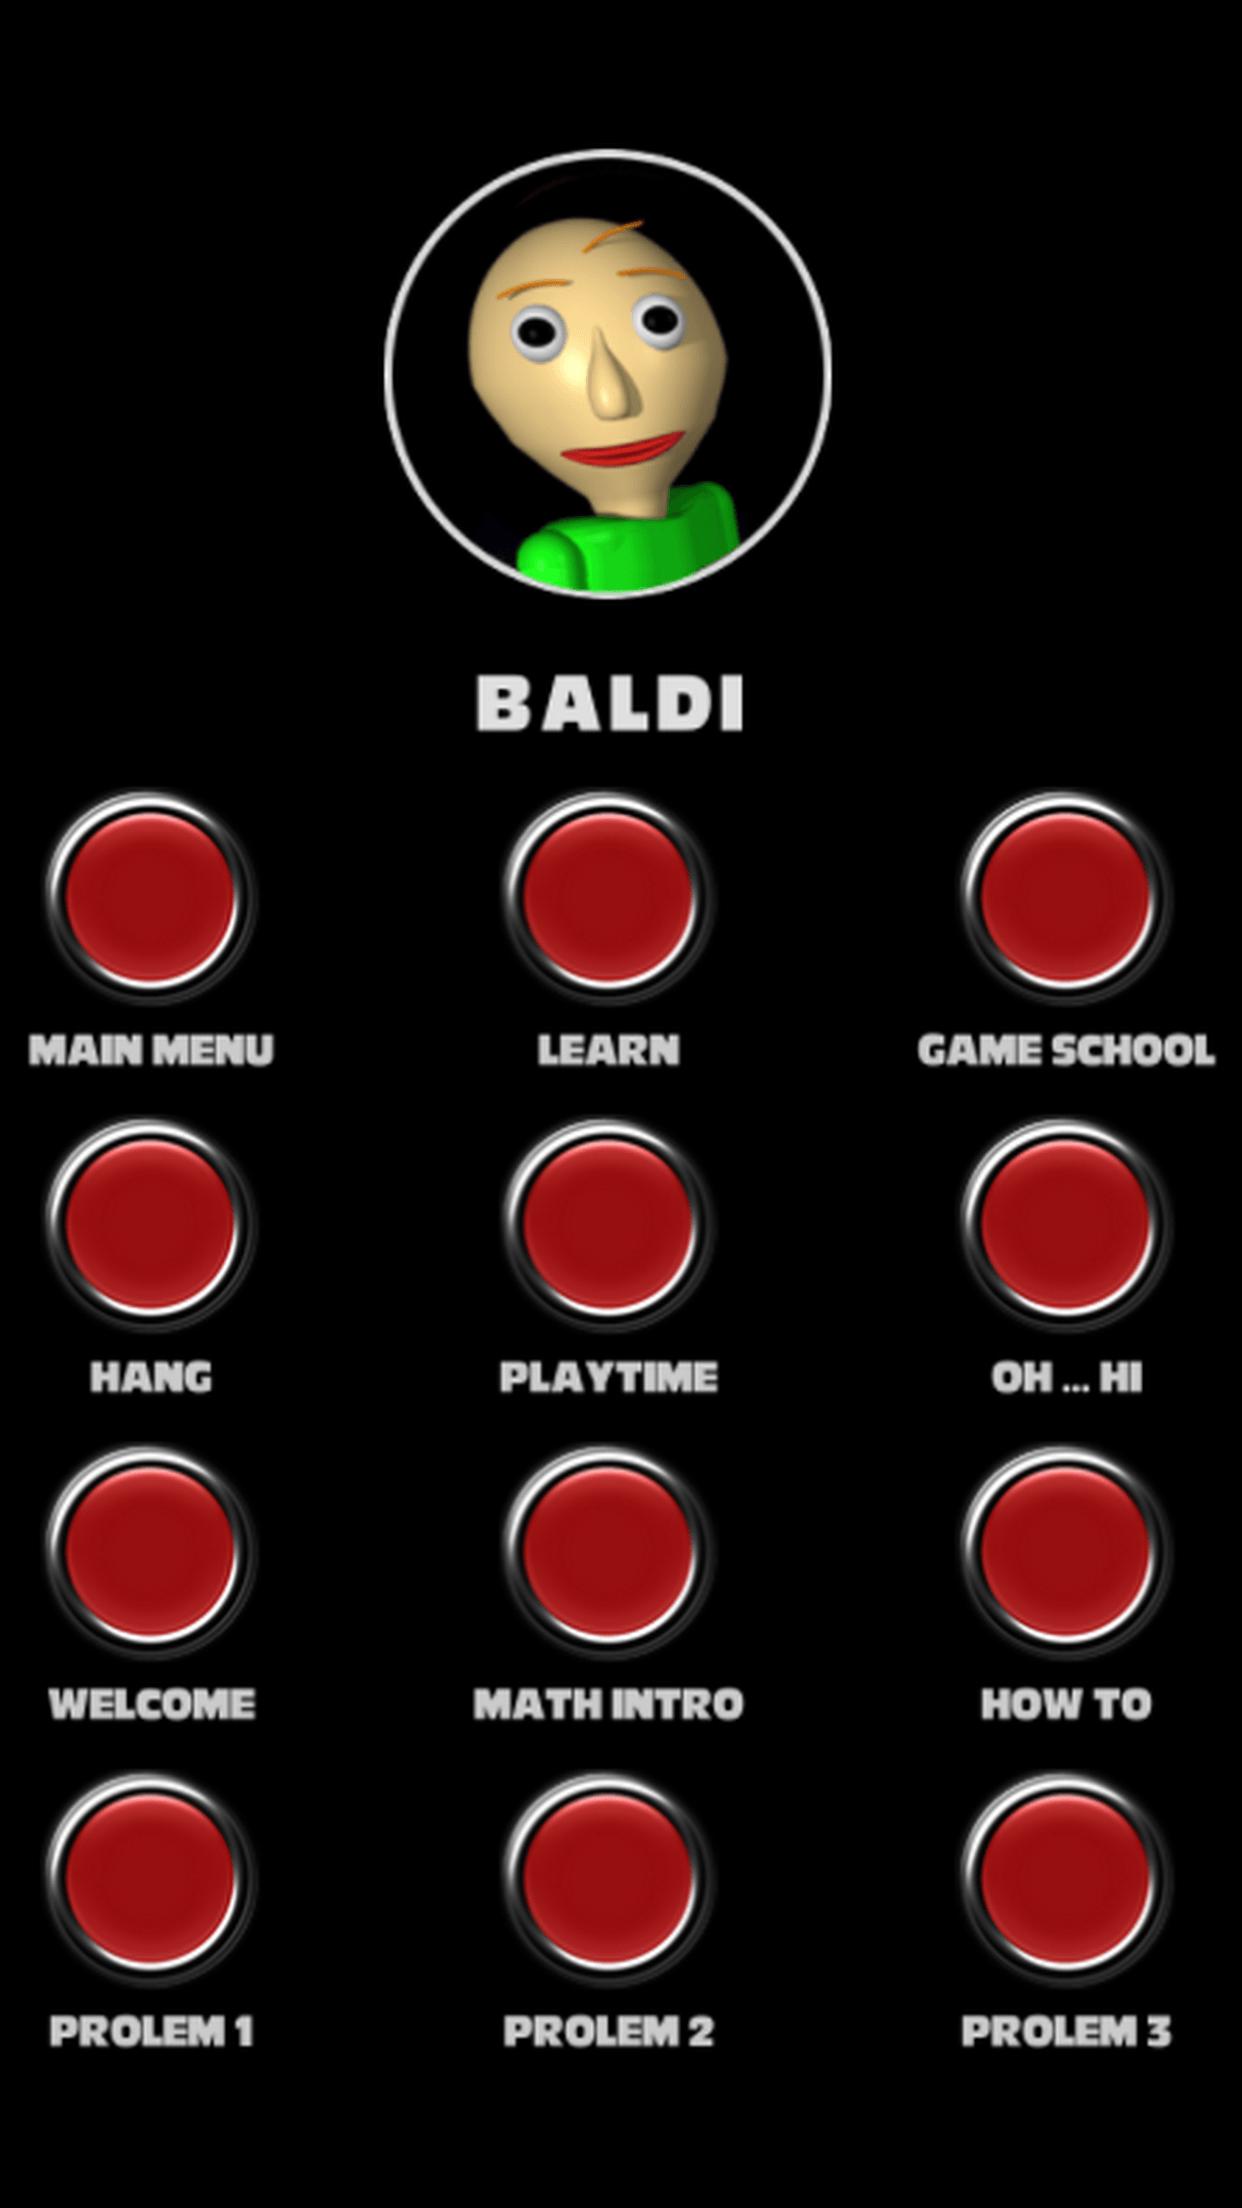 Baldi soundboard. Baldi Basics Soundboard. Scratch Baldi Basics Soundboard. Baldis Basics Sound Board Plus Edition part1. Cloudy Copter Voices Baldi Basics Soundboard.